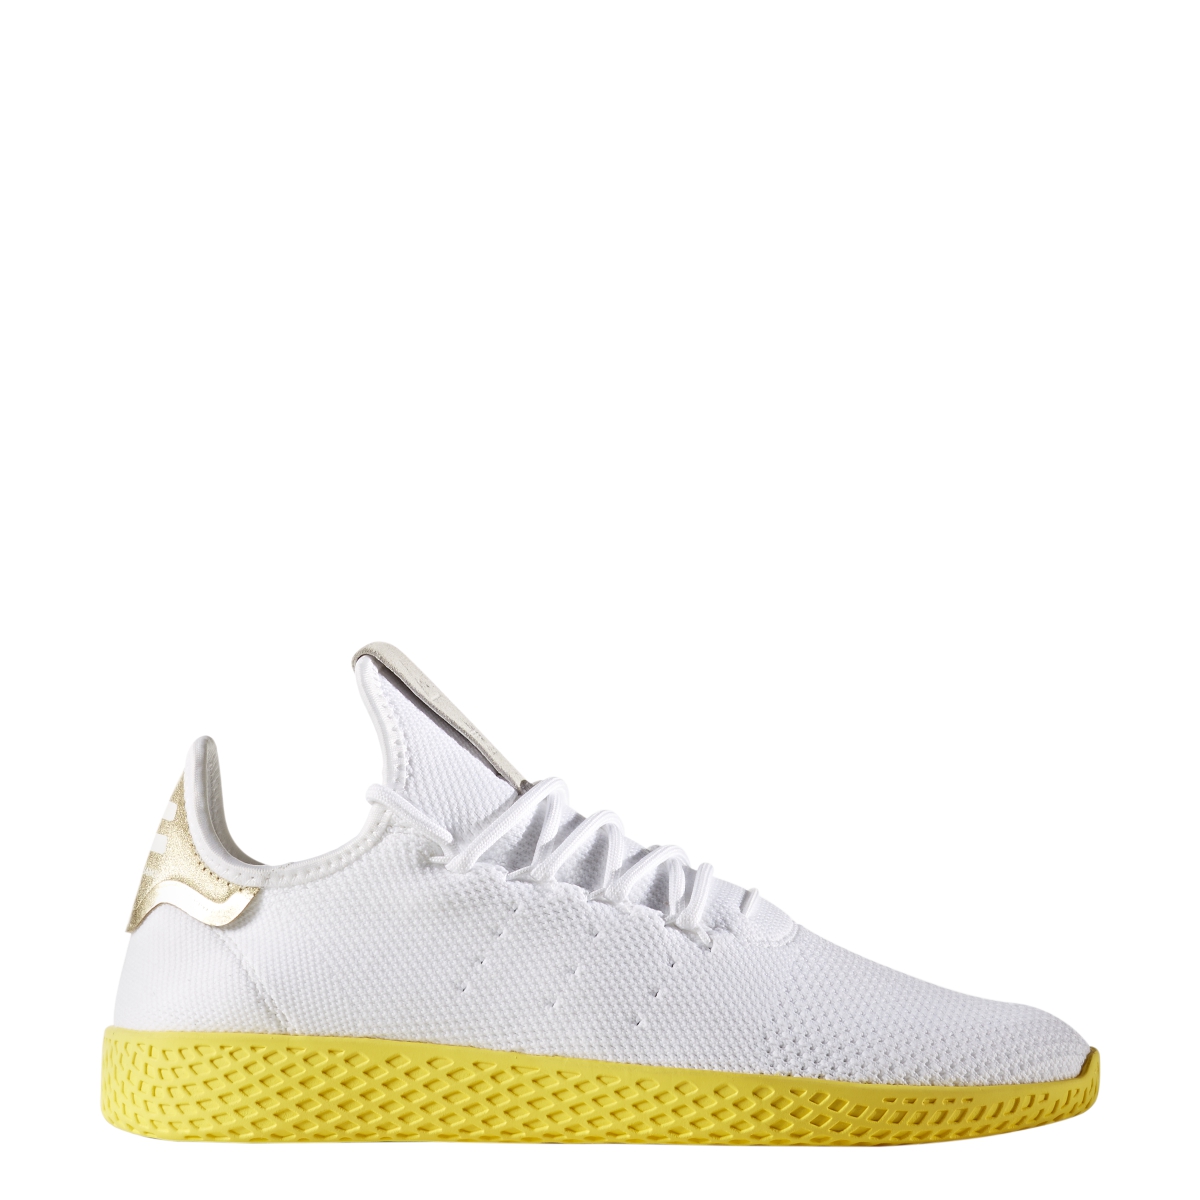 adidas x pharrell williams tennis hu white shoes